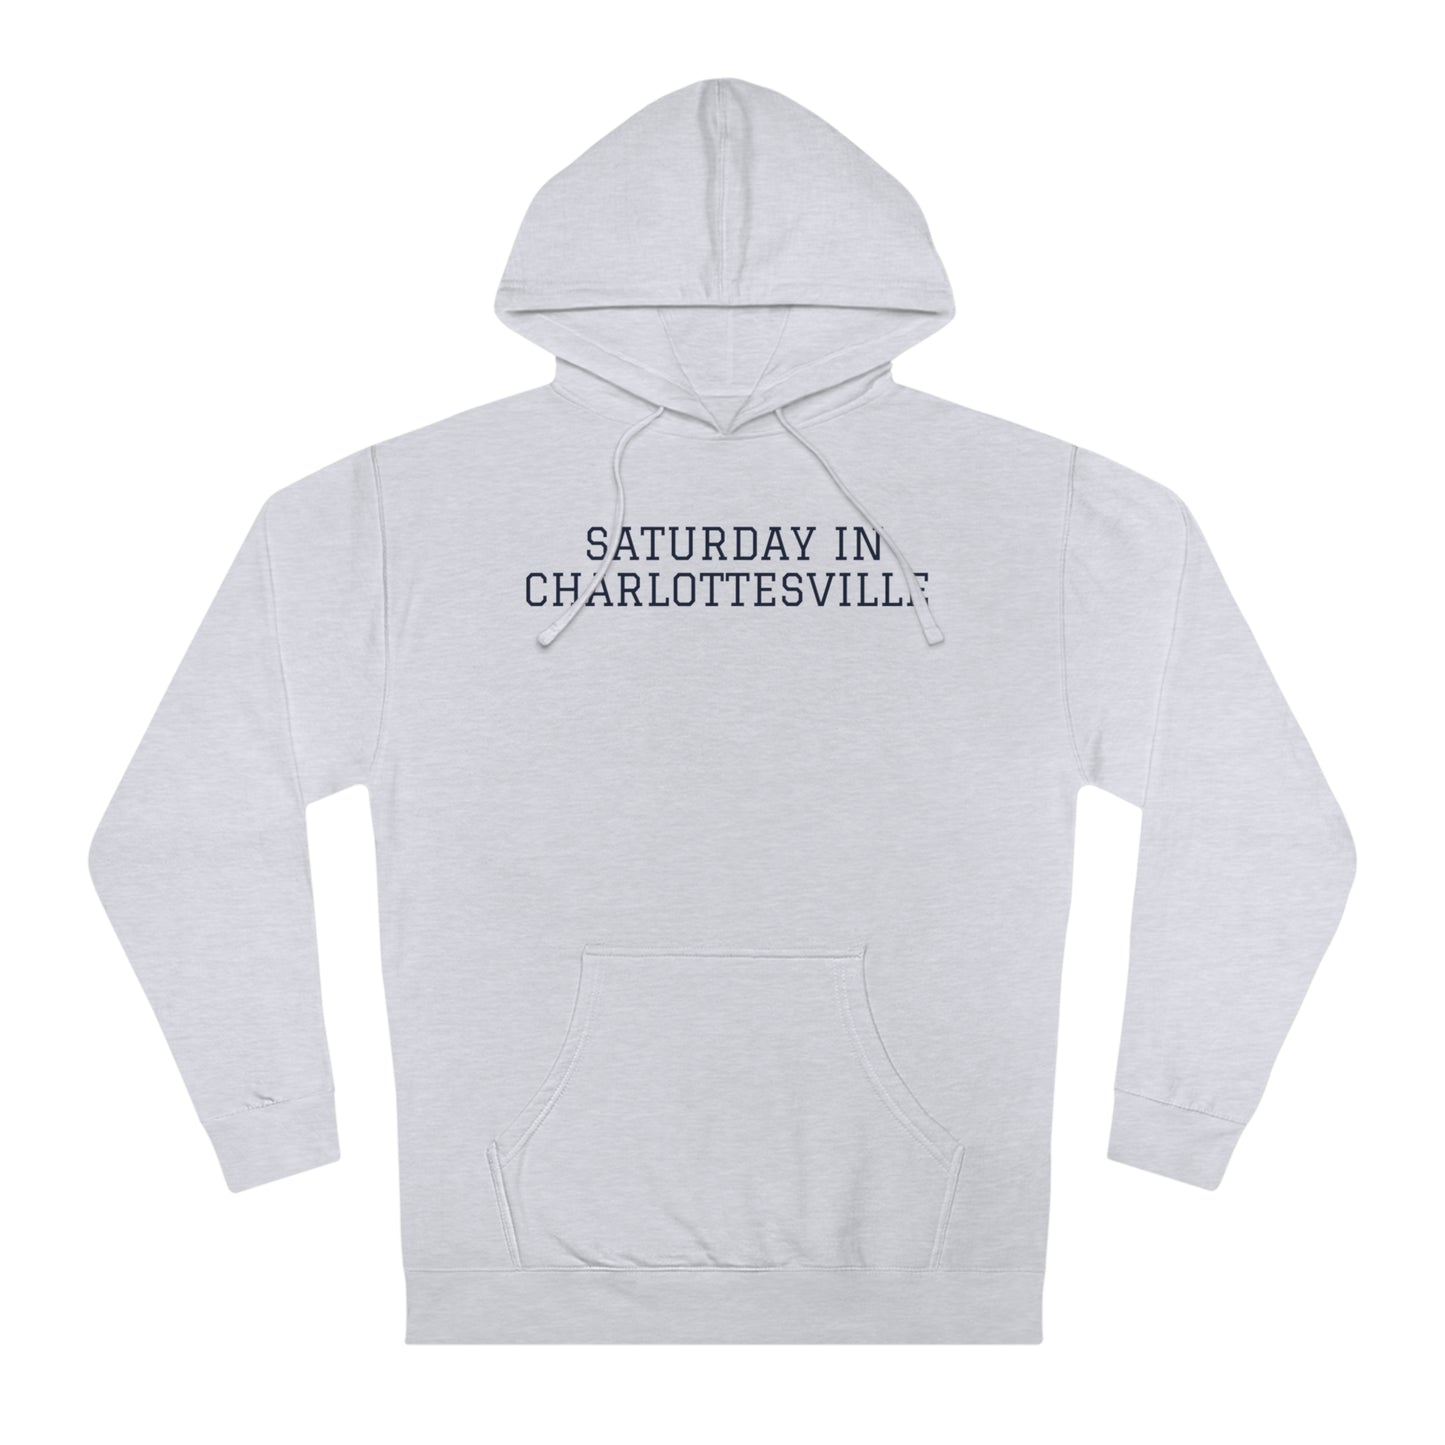 Saturday in Charlottesville Hooded Sweatshirt